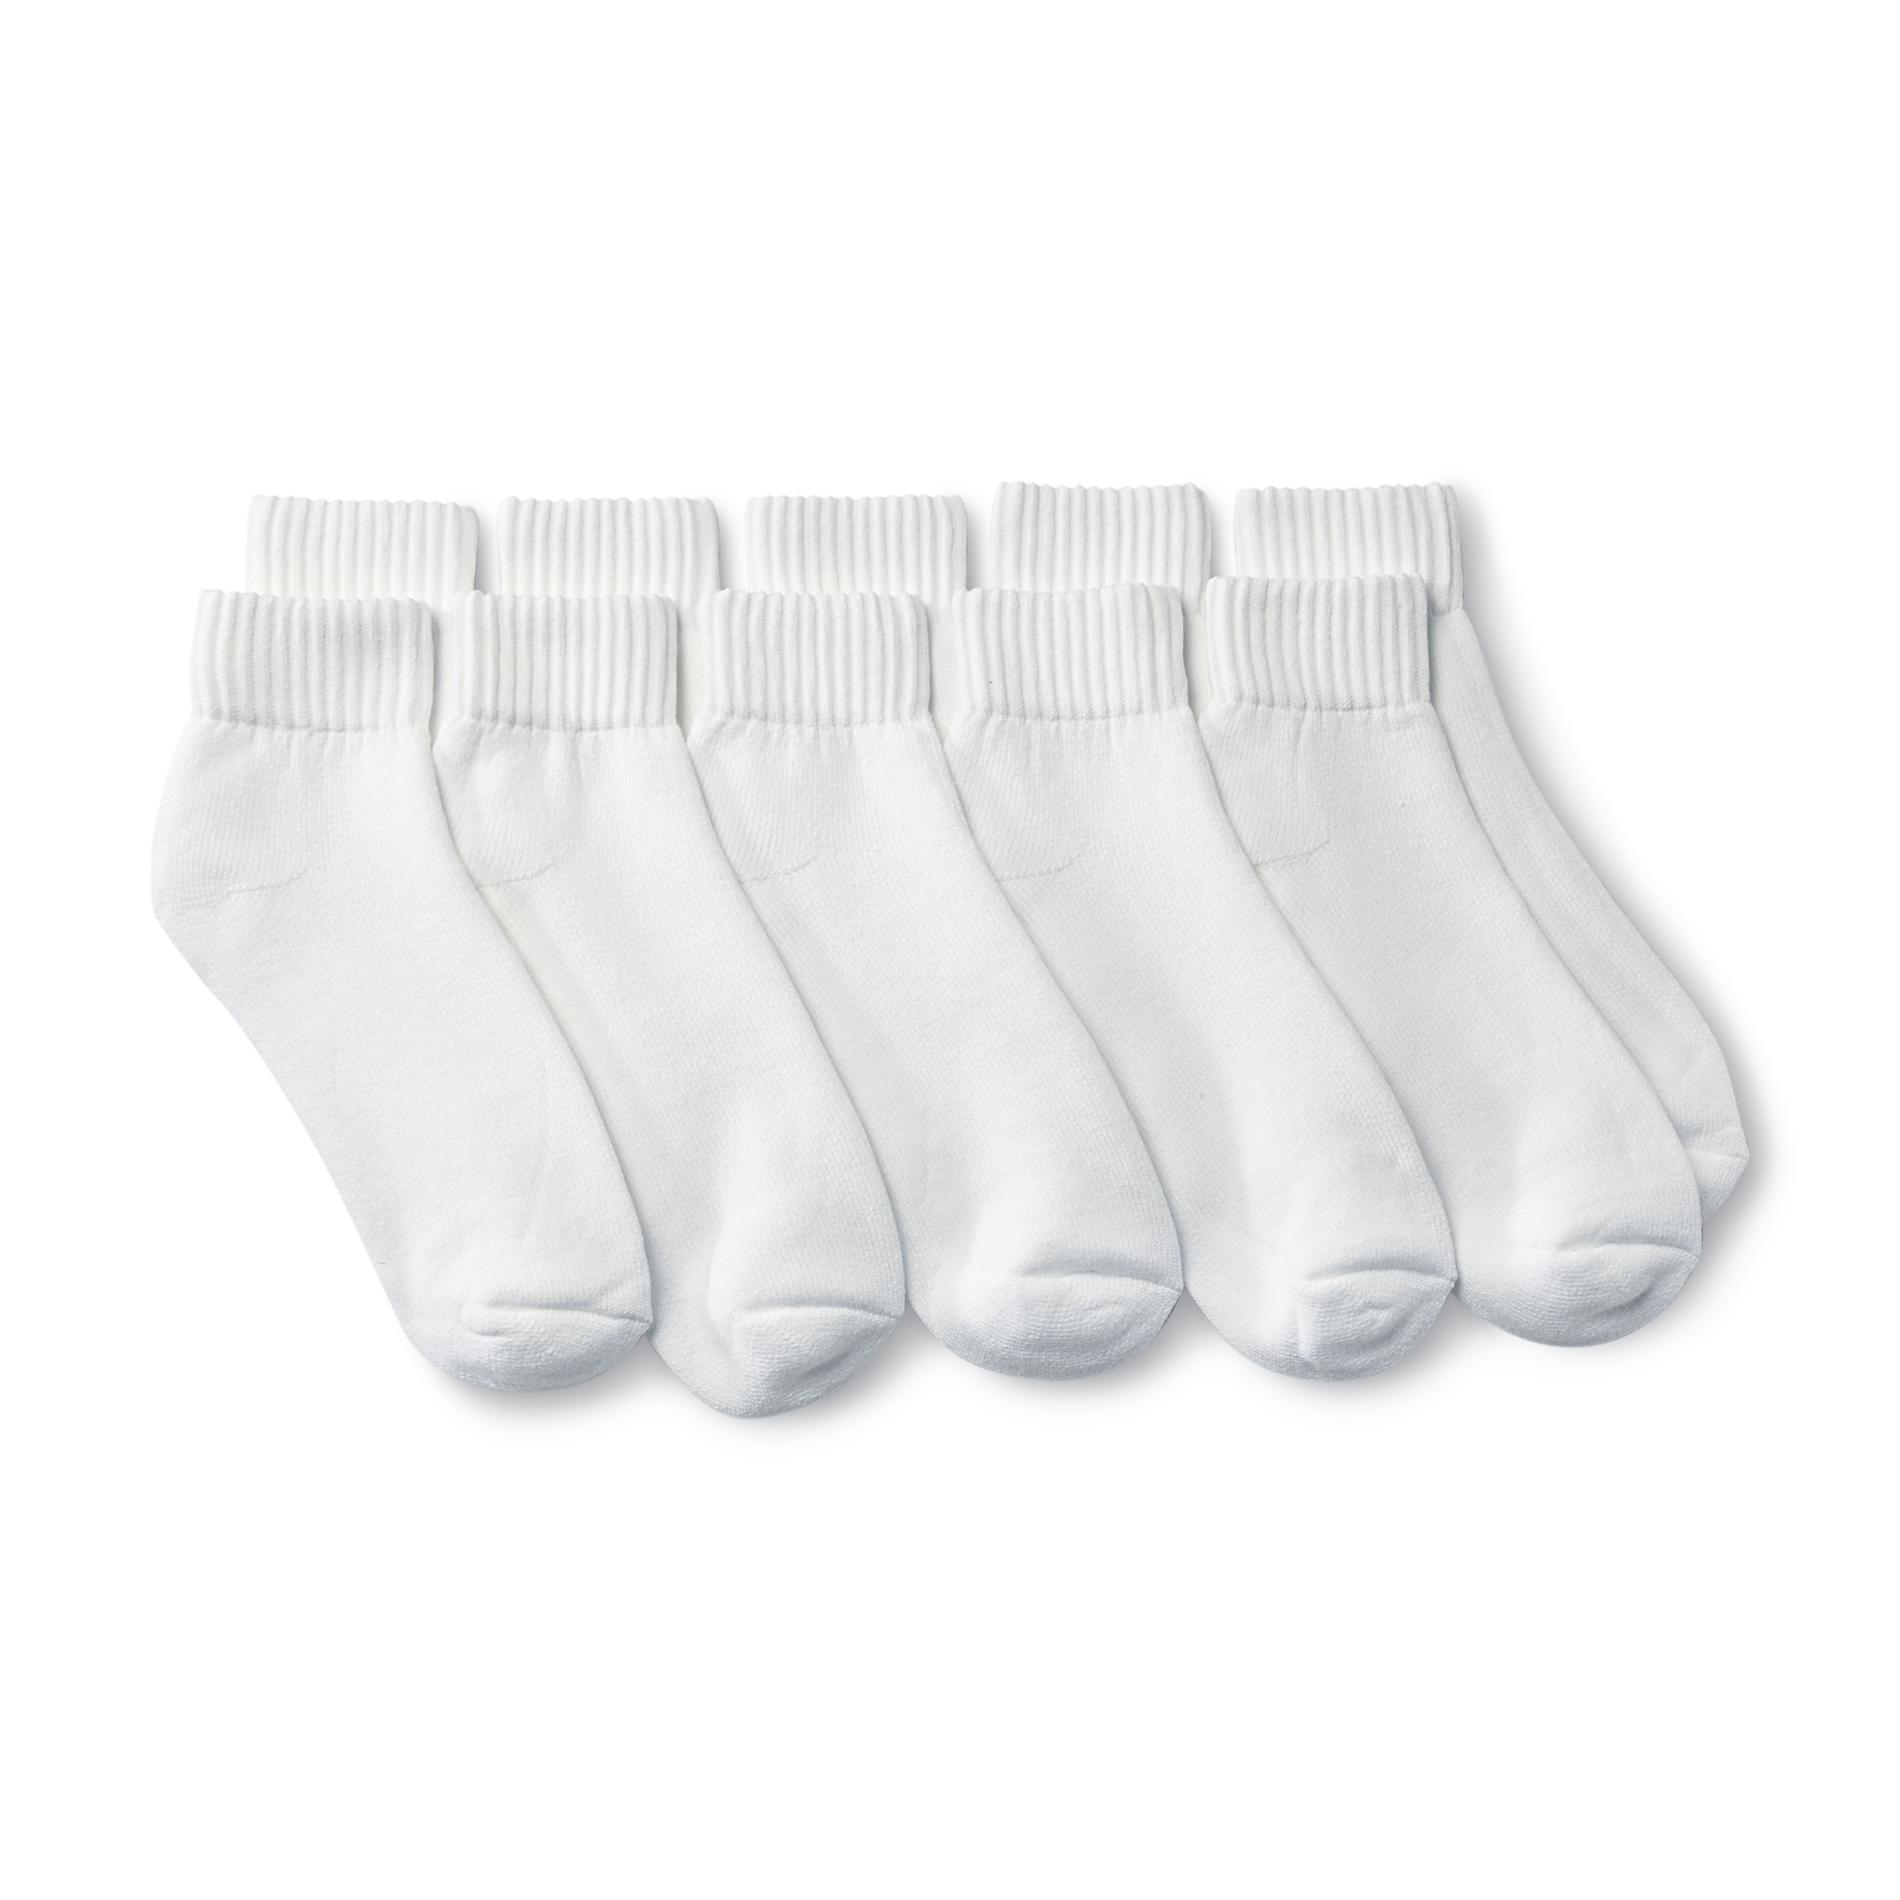 NordicTrack Men's Quarter Length Performance Socks